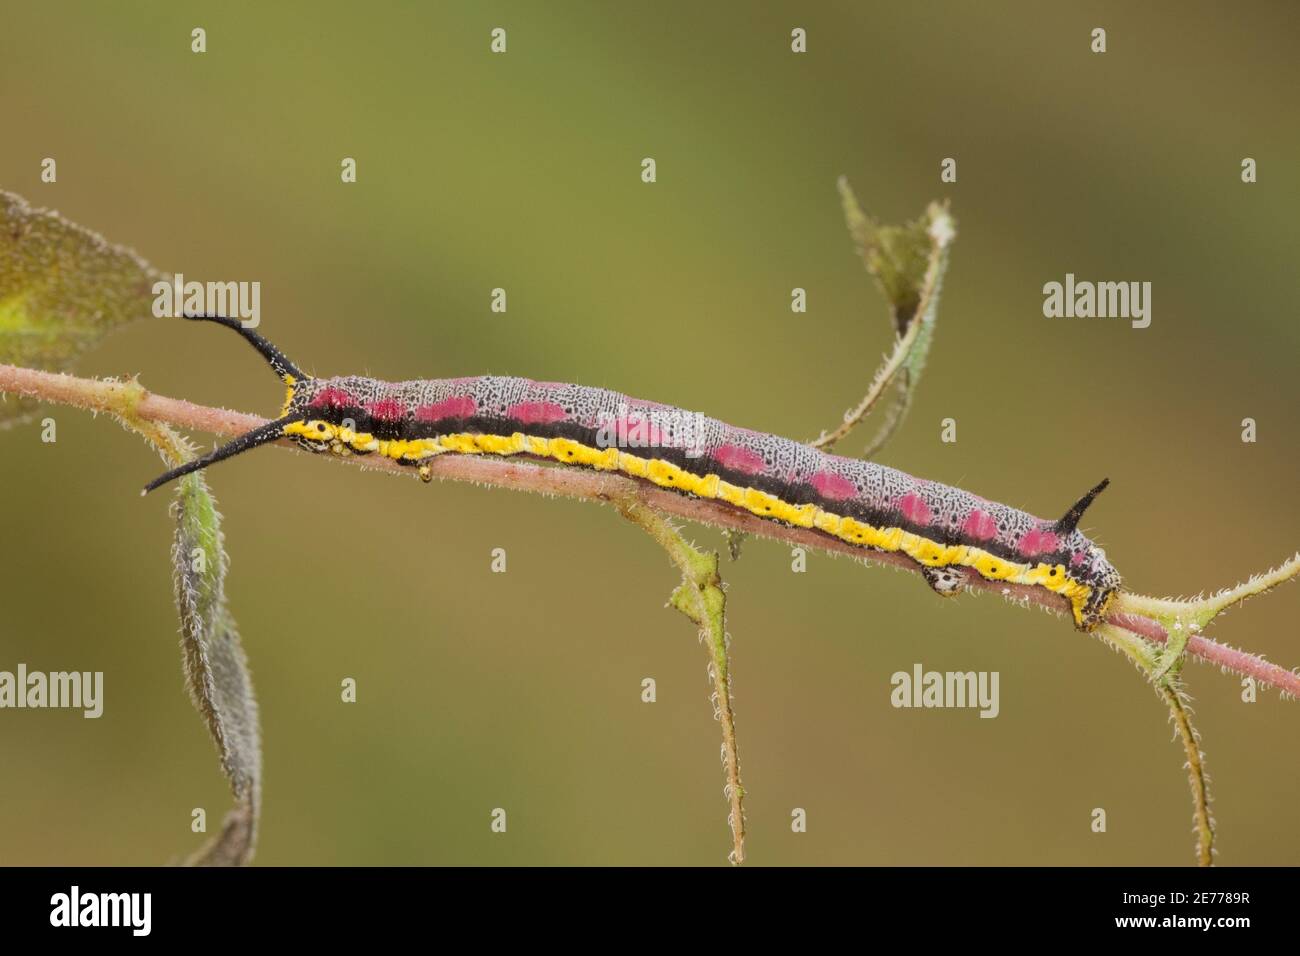 Geometrid Moth larva, Ceratonyx arizonensis, Geometridae. Feeding on Heartleaf Goldeneye, Viguiera cordifolia. Length 45 mm. Same as 14091169-14091183 Stock Photo